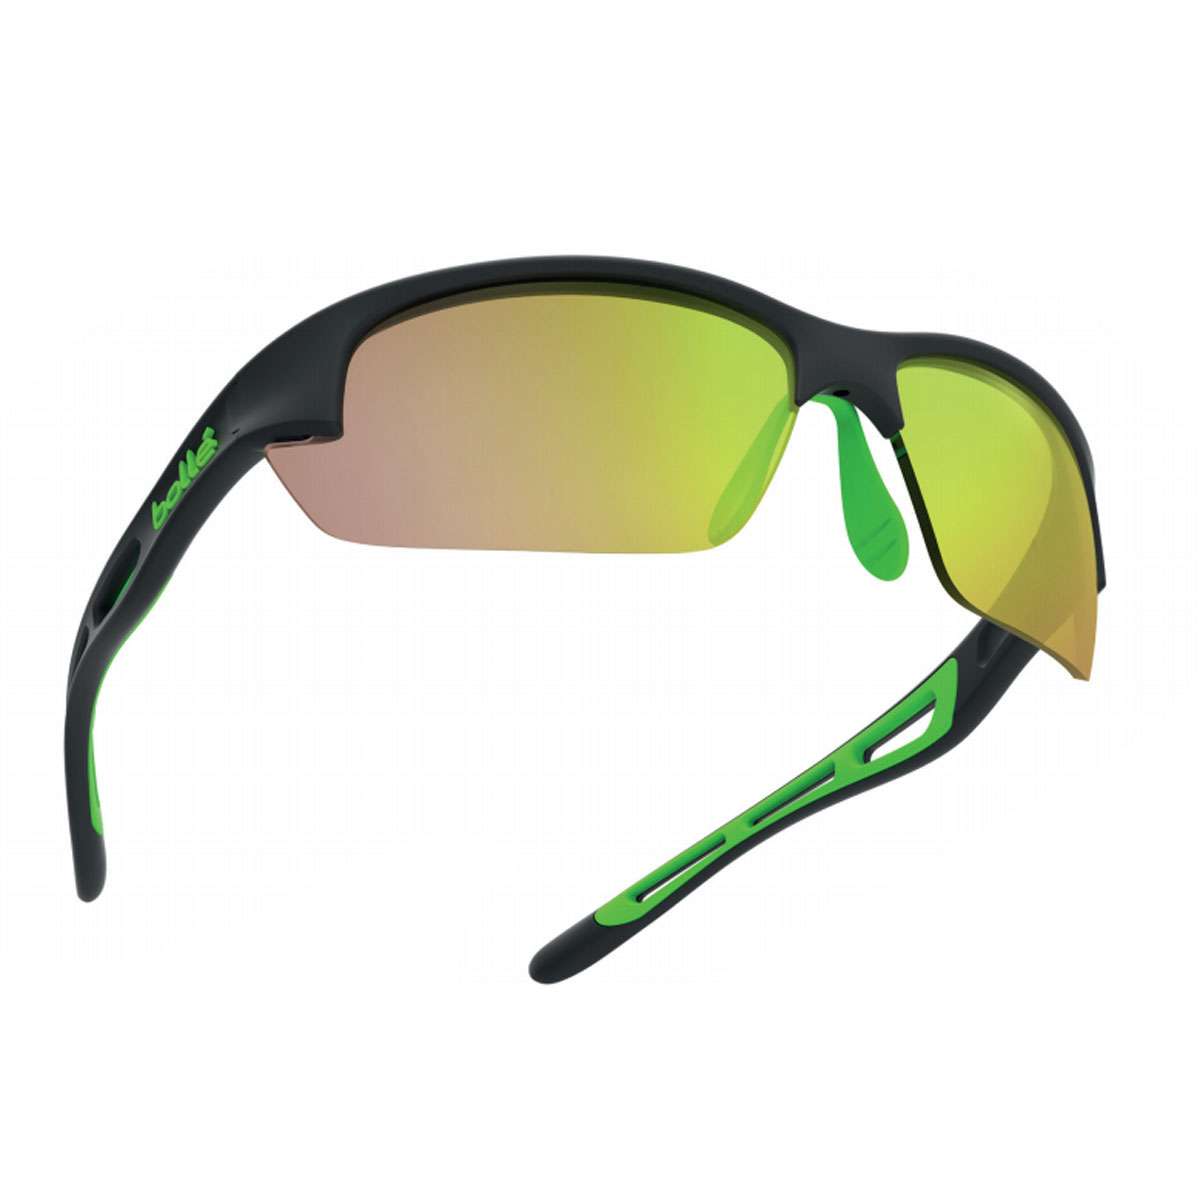 Bolt S Sunglasses - Matte White Green Rubber Frame/Brown Emerald Lens - 12418 - image 1 of 2